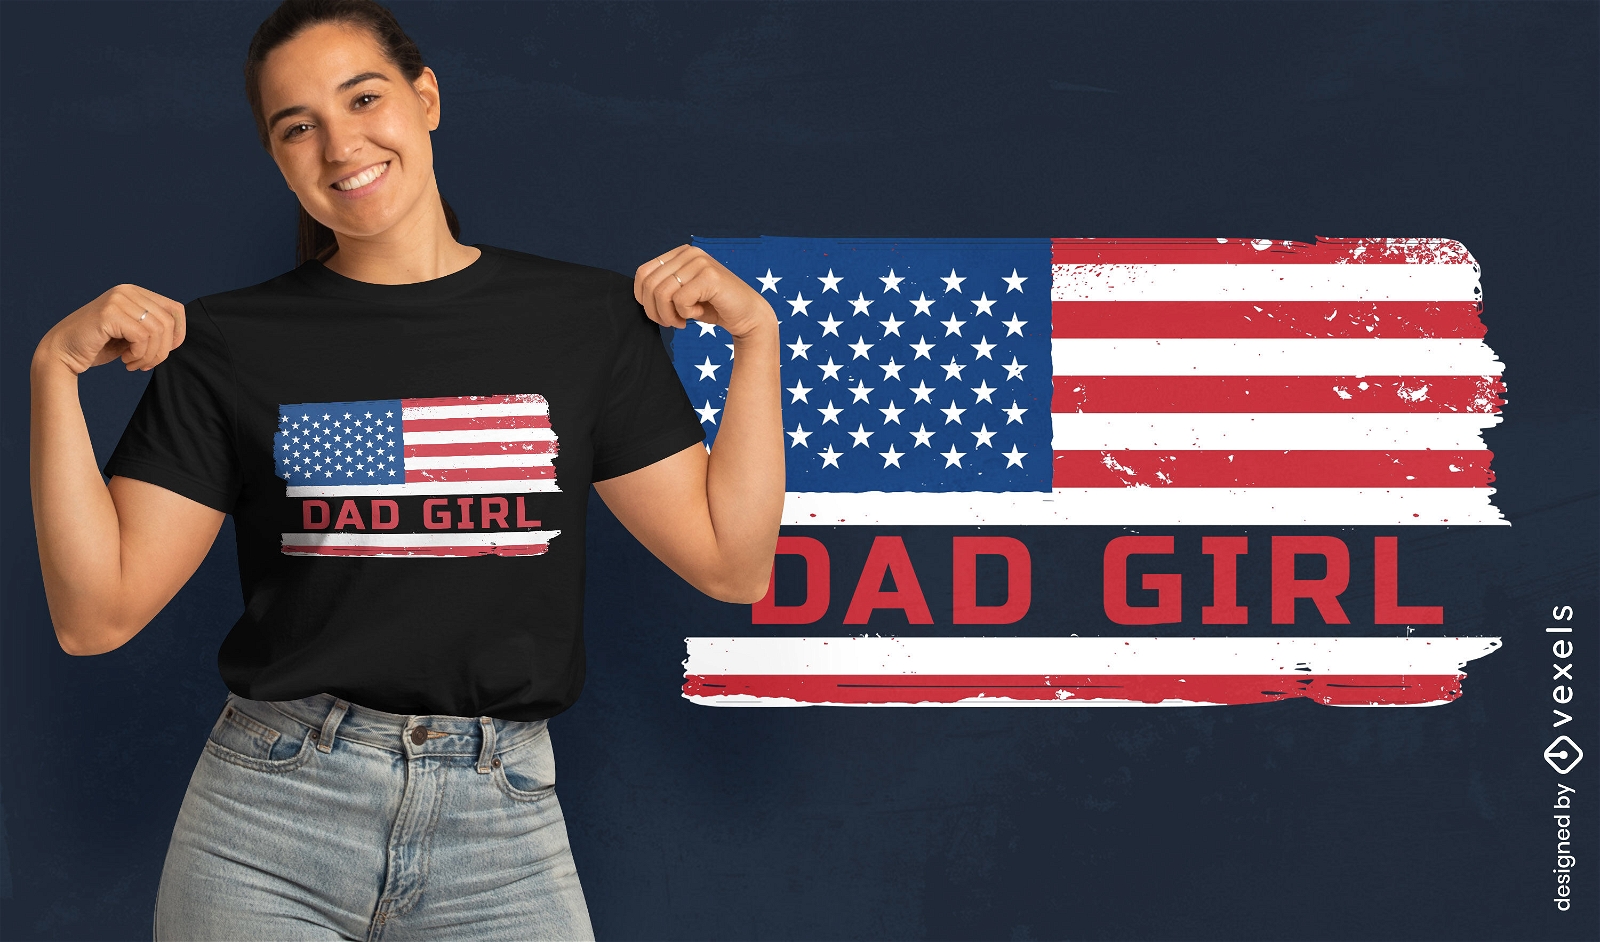 Papa-M?dchen-T-Shirt-Design mit US-Flagge